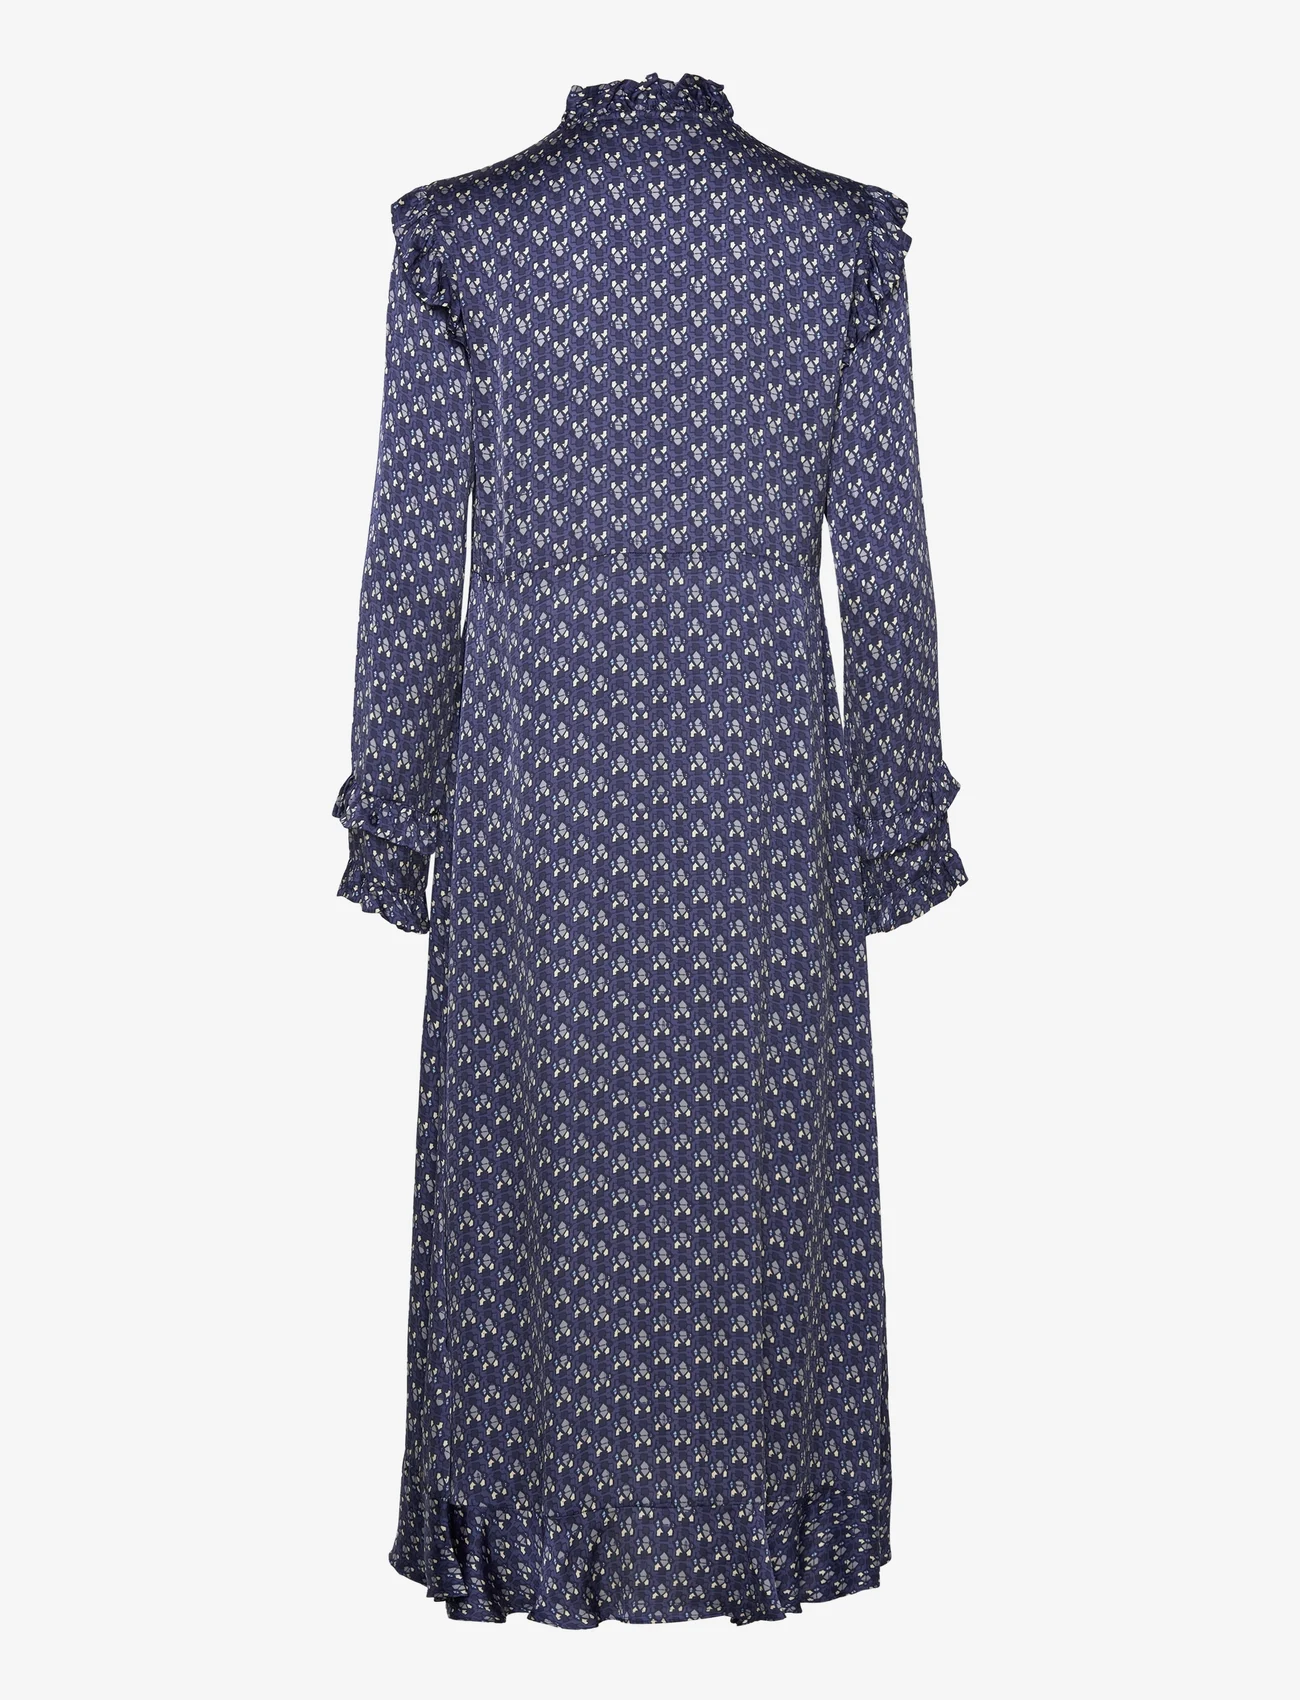 ODD MOLLY - Rachael Dress - ballīšu apģērbs par outlet cenām - stormy blue - 1